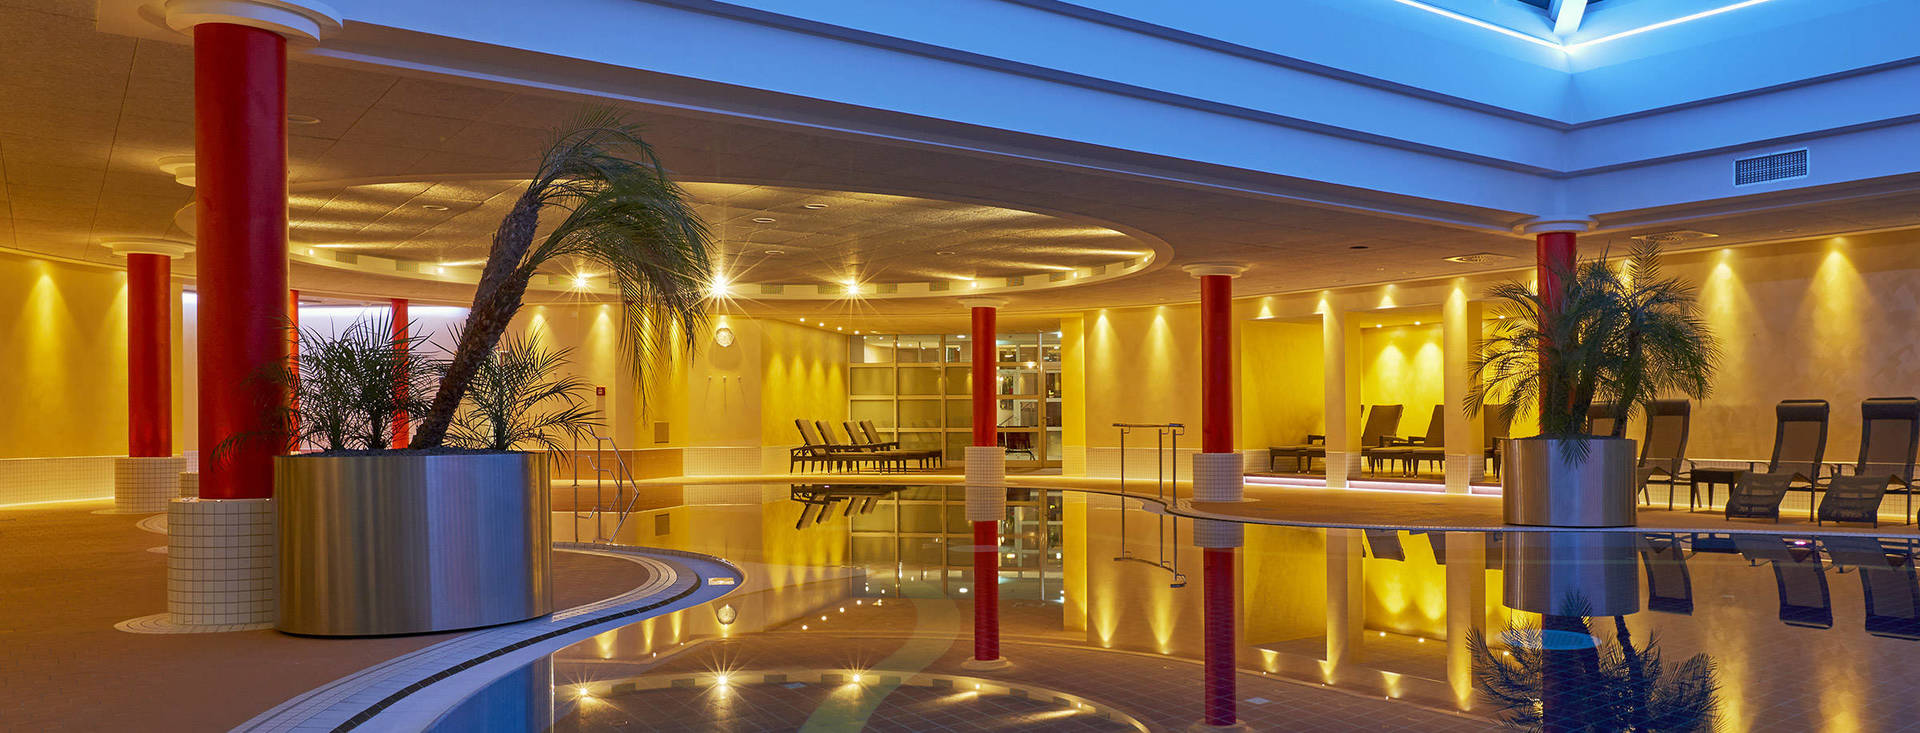 Wellness in the H+ Hotel & Spa Friedrichroda - Offizielle Webseite